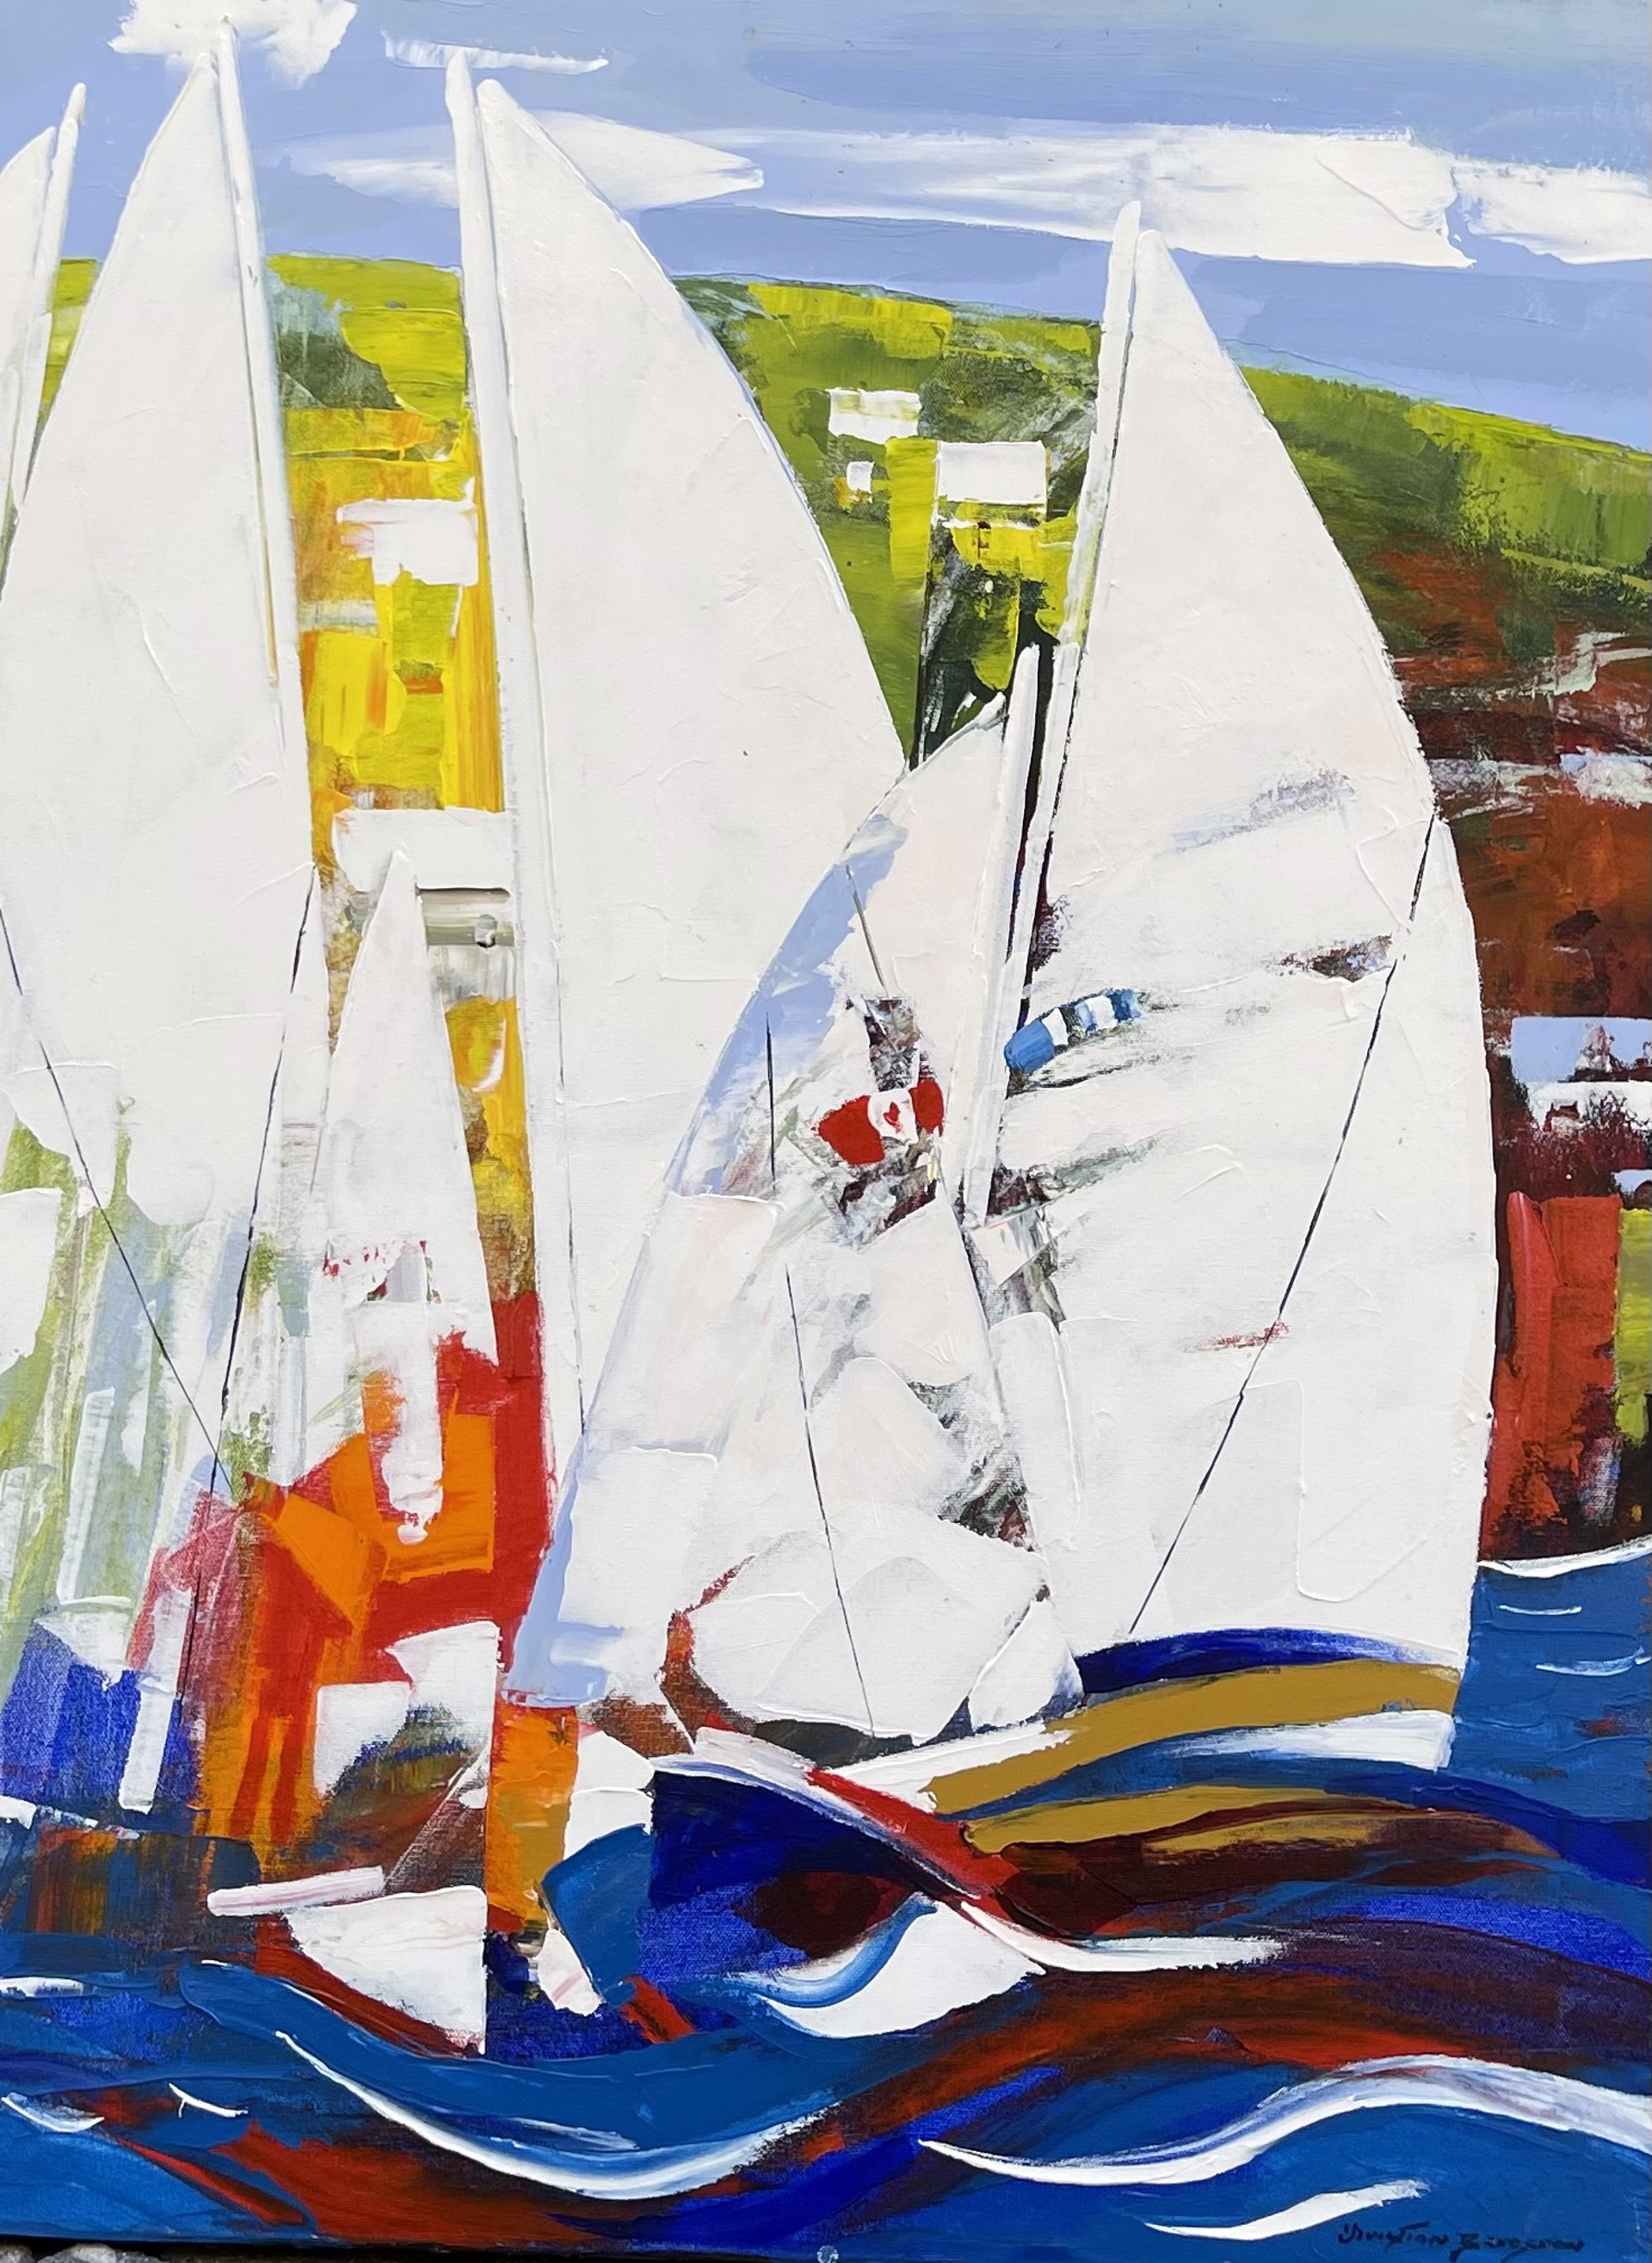 All Sails Ahead by Christian Bergeron